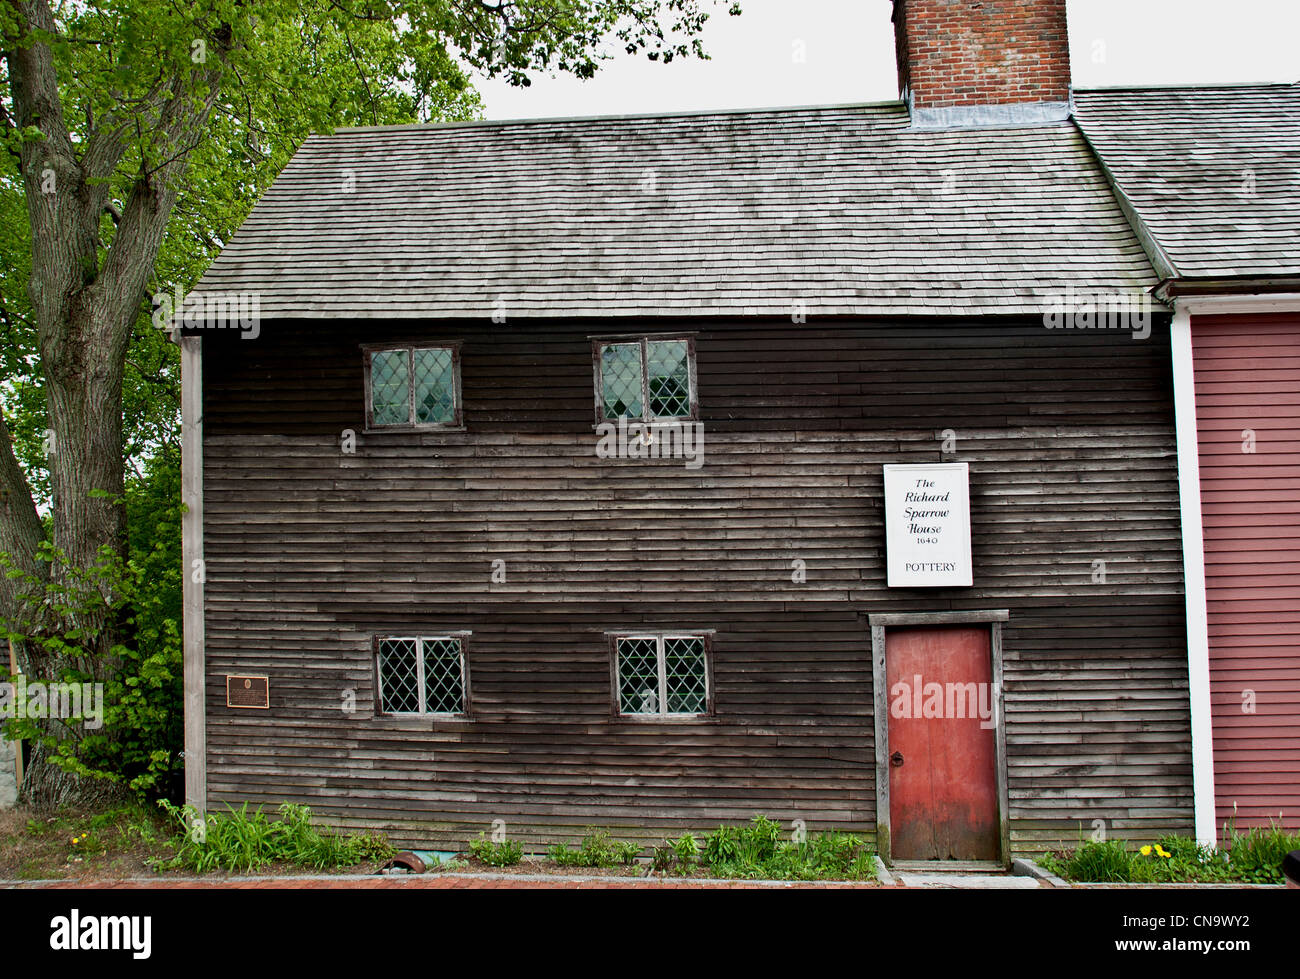 Richard Sparrow House 1636 Plymouth Massachusetts, exterior view Stock Photo